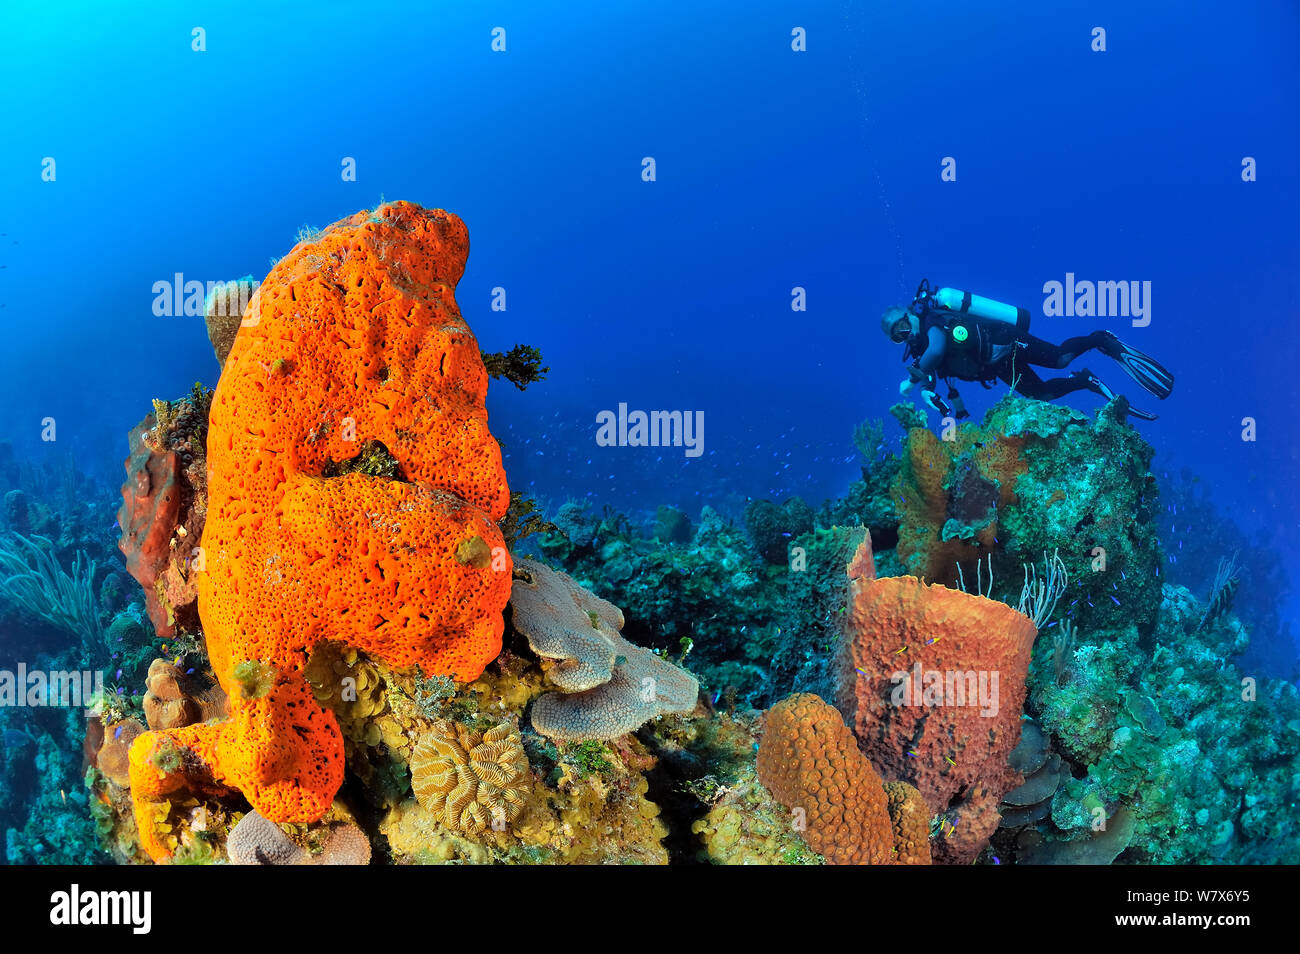 Diver on coral reef with a Giant barrel sponge (Xestospongia muta), Elephant ear sponge (Agelas clathrodes) and corals, San Salvador Island / Colombus Island, Bahamas. Caribbean. June 2013. Stock Photo